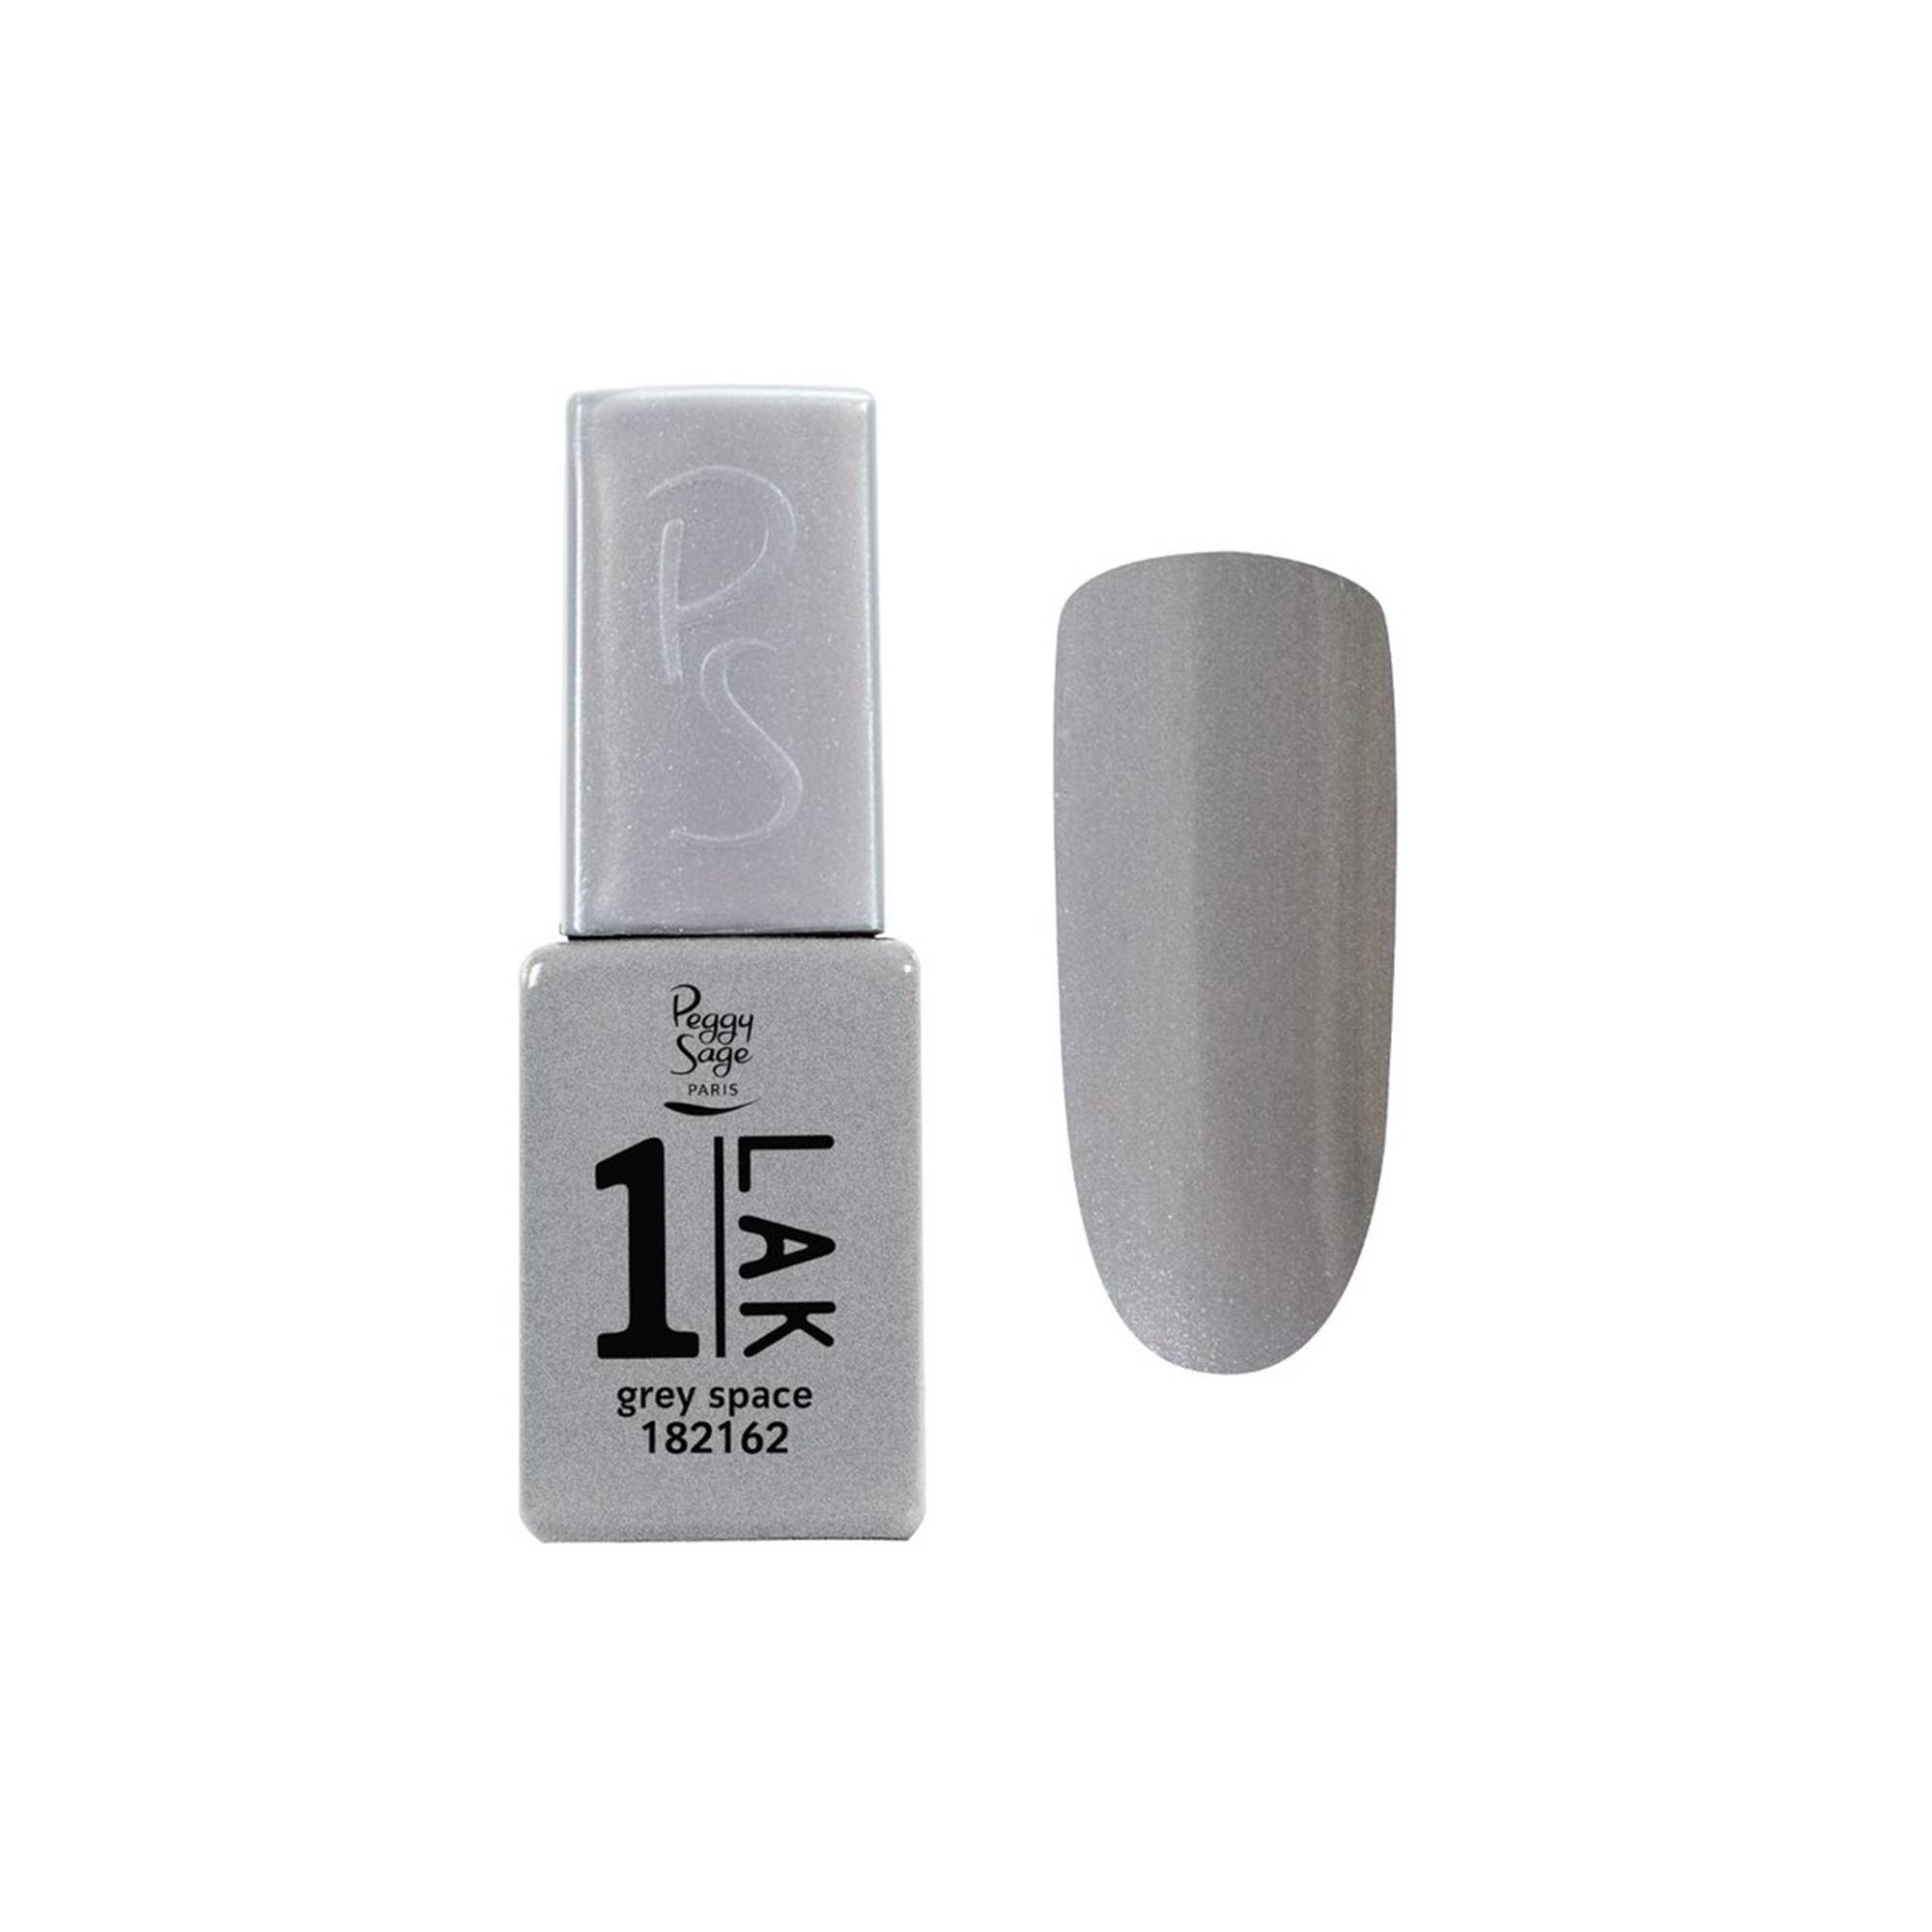 Vernis semi-permanent One-LAK 1-step gel polish grey space de la marque Peggy Sage Contenance 5ml - 1